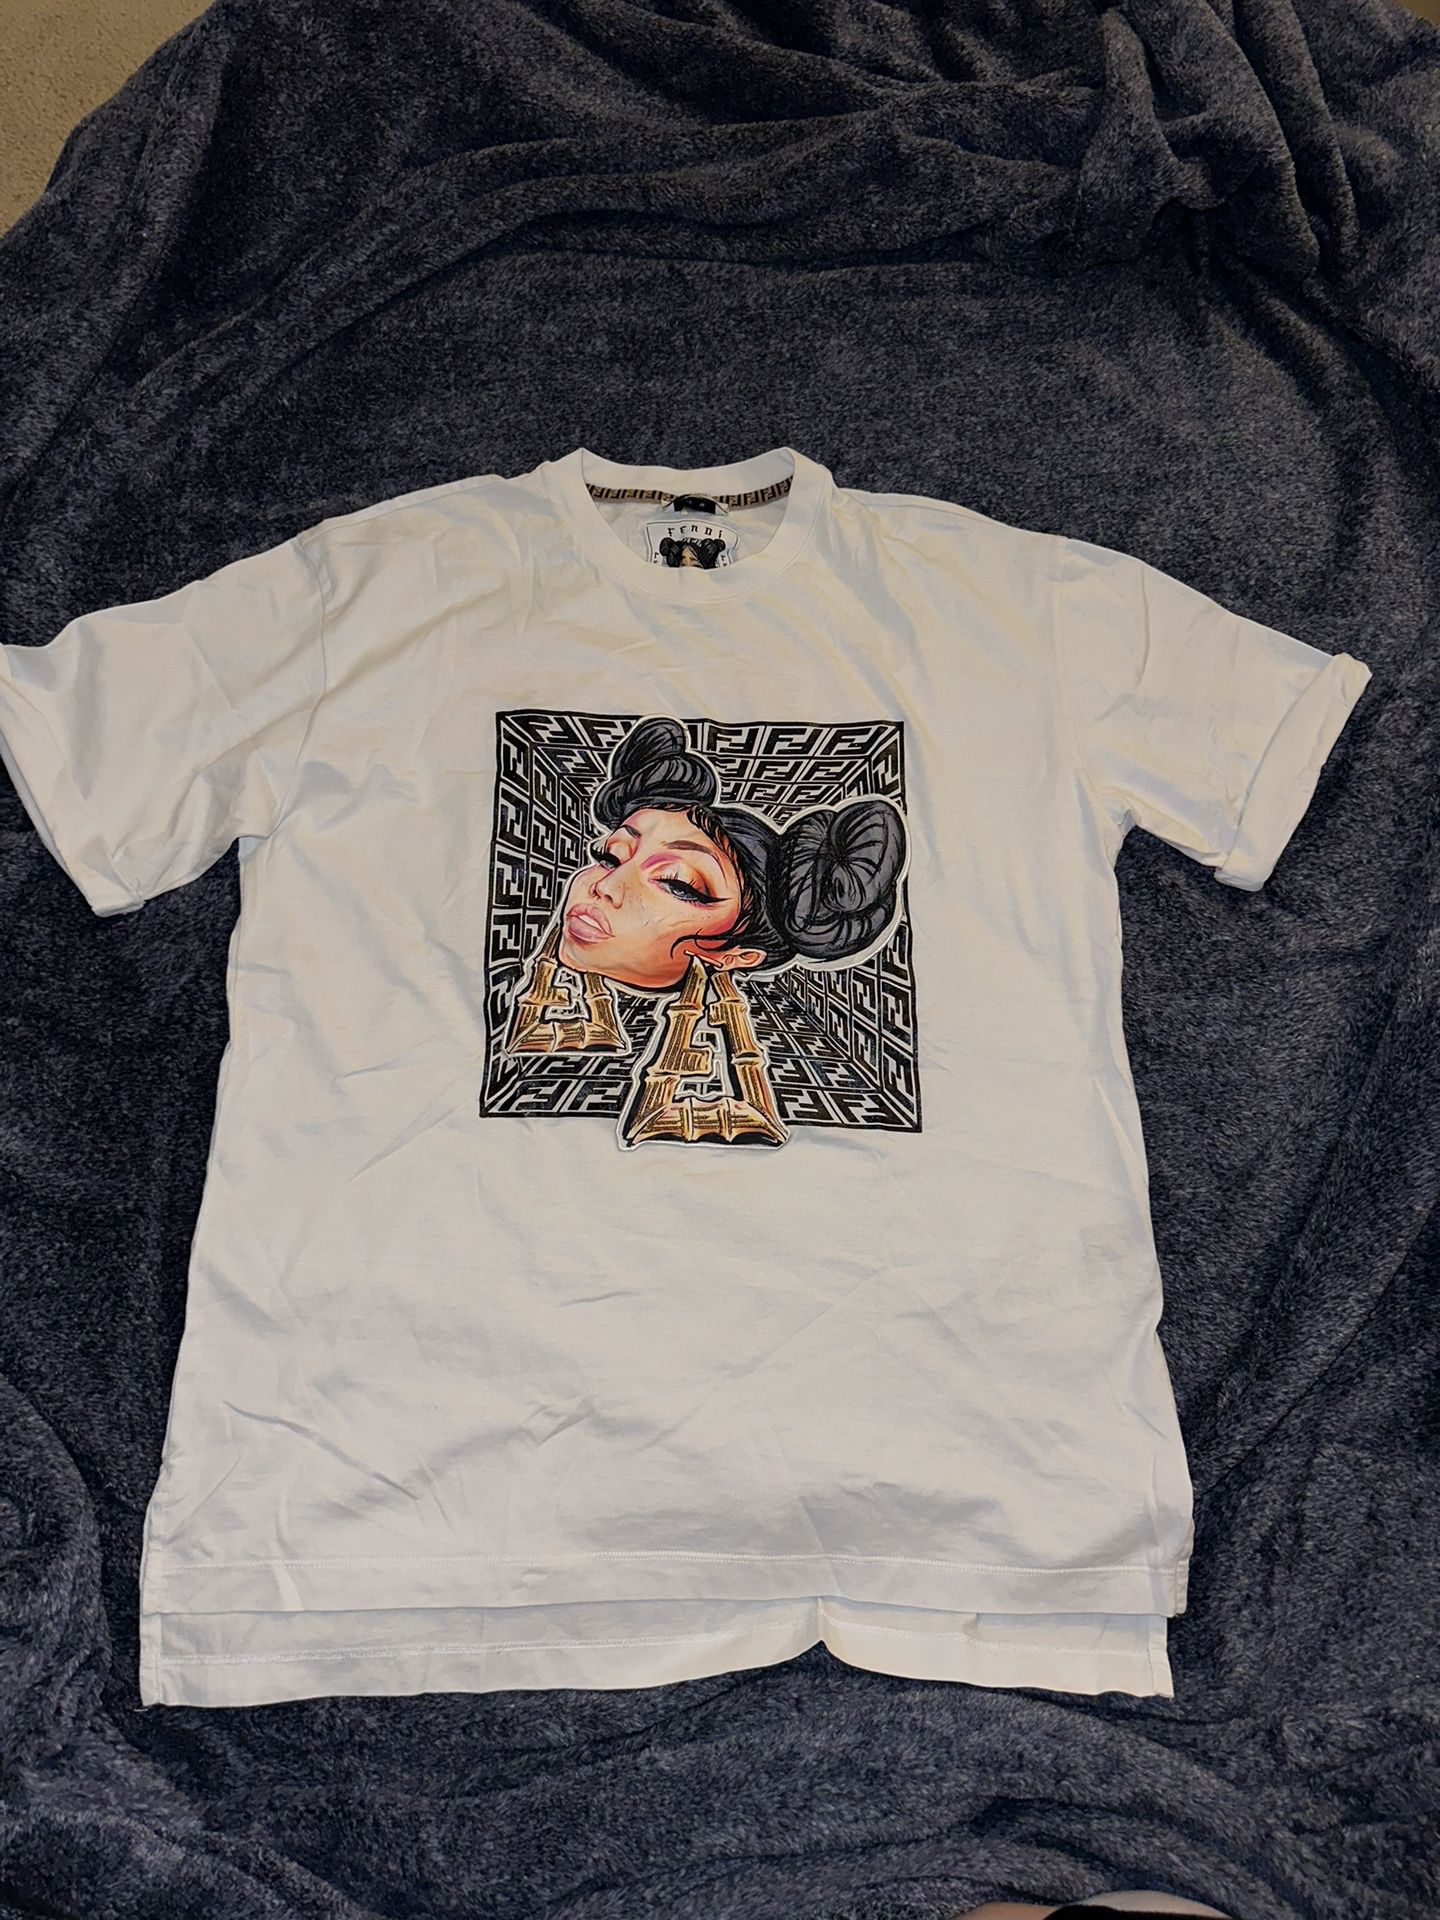 Fendi Nicki Minaj Shirt And Gucci Apple 